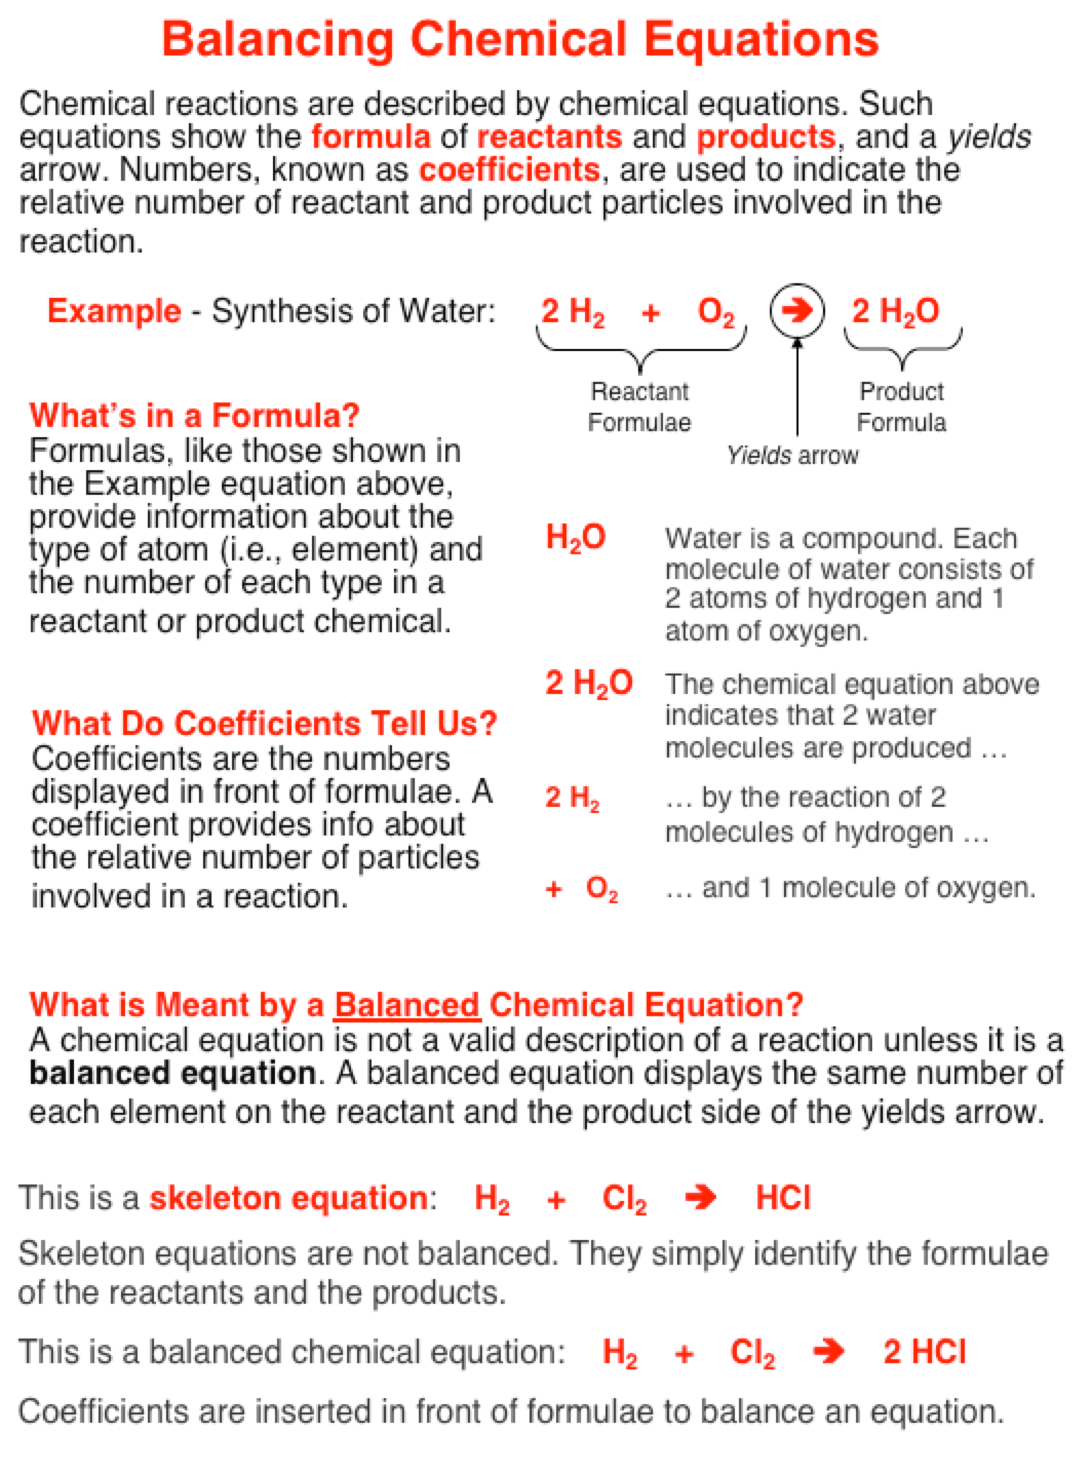 my chemical equation balancer